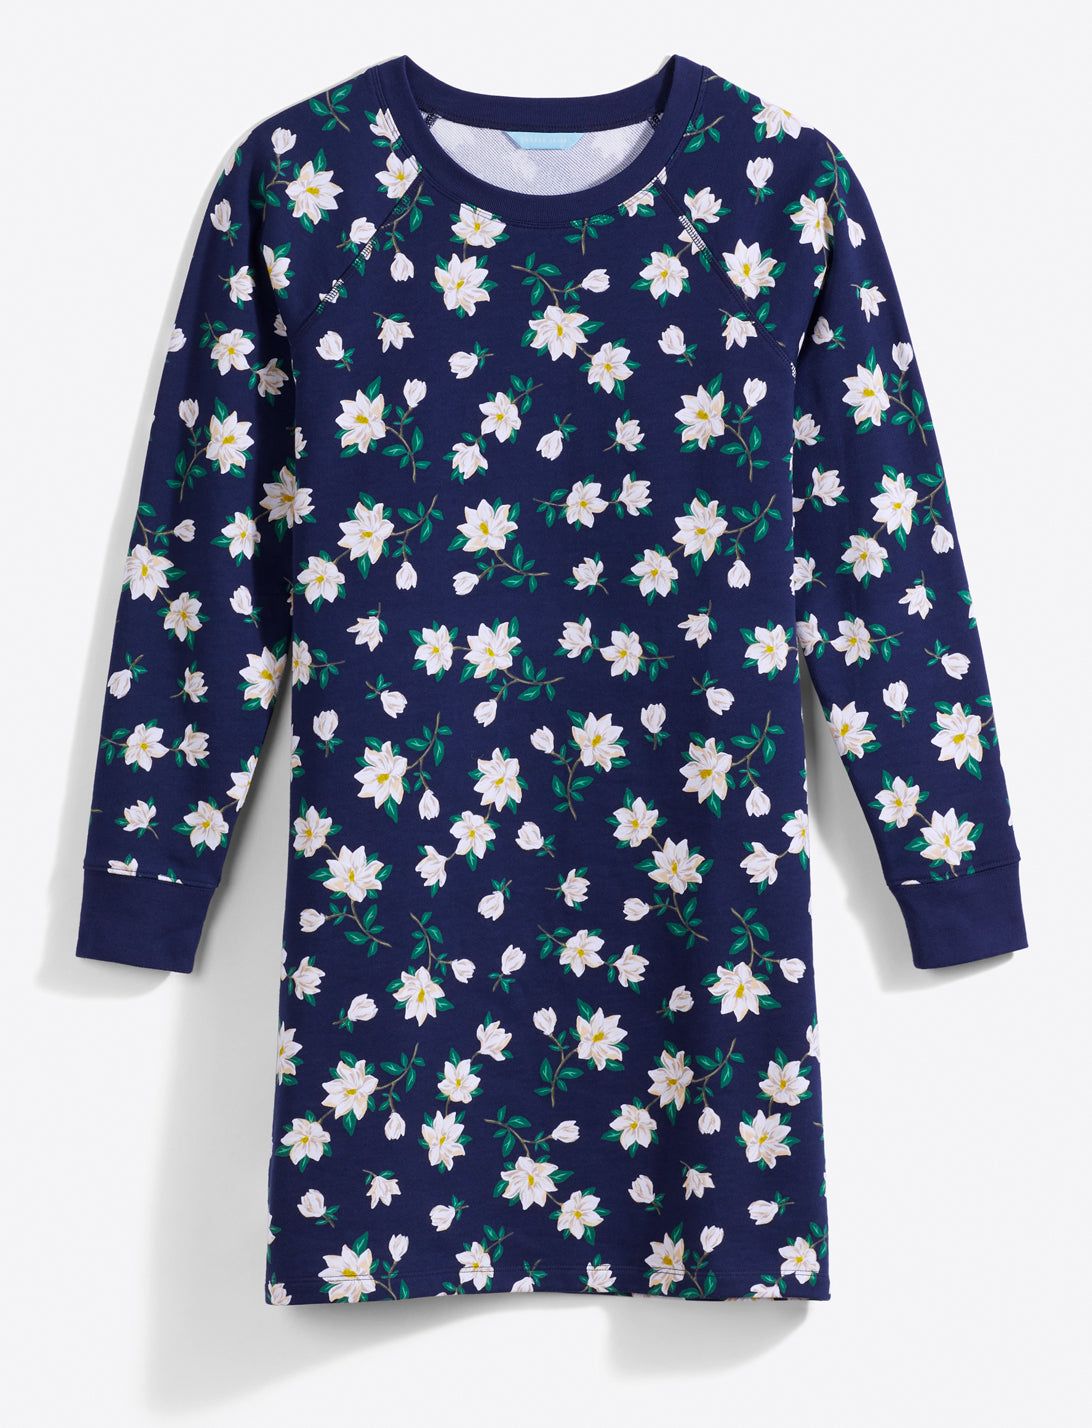 Natalie Sweatshirt Dress in Magnolia | Draper James (US)